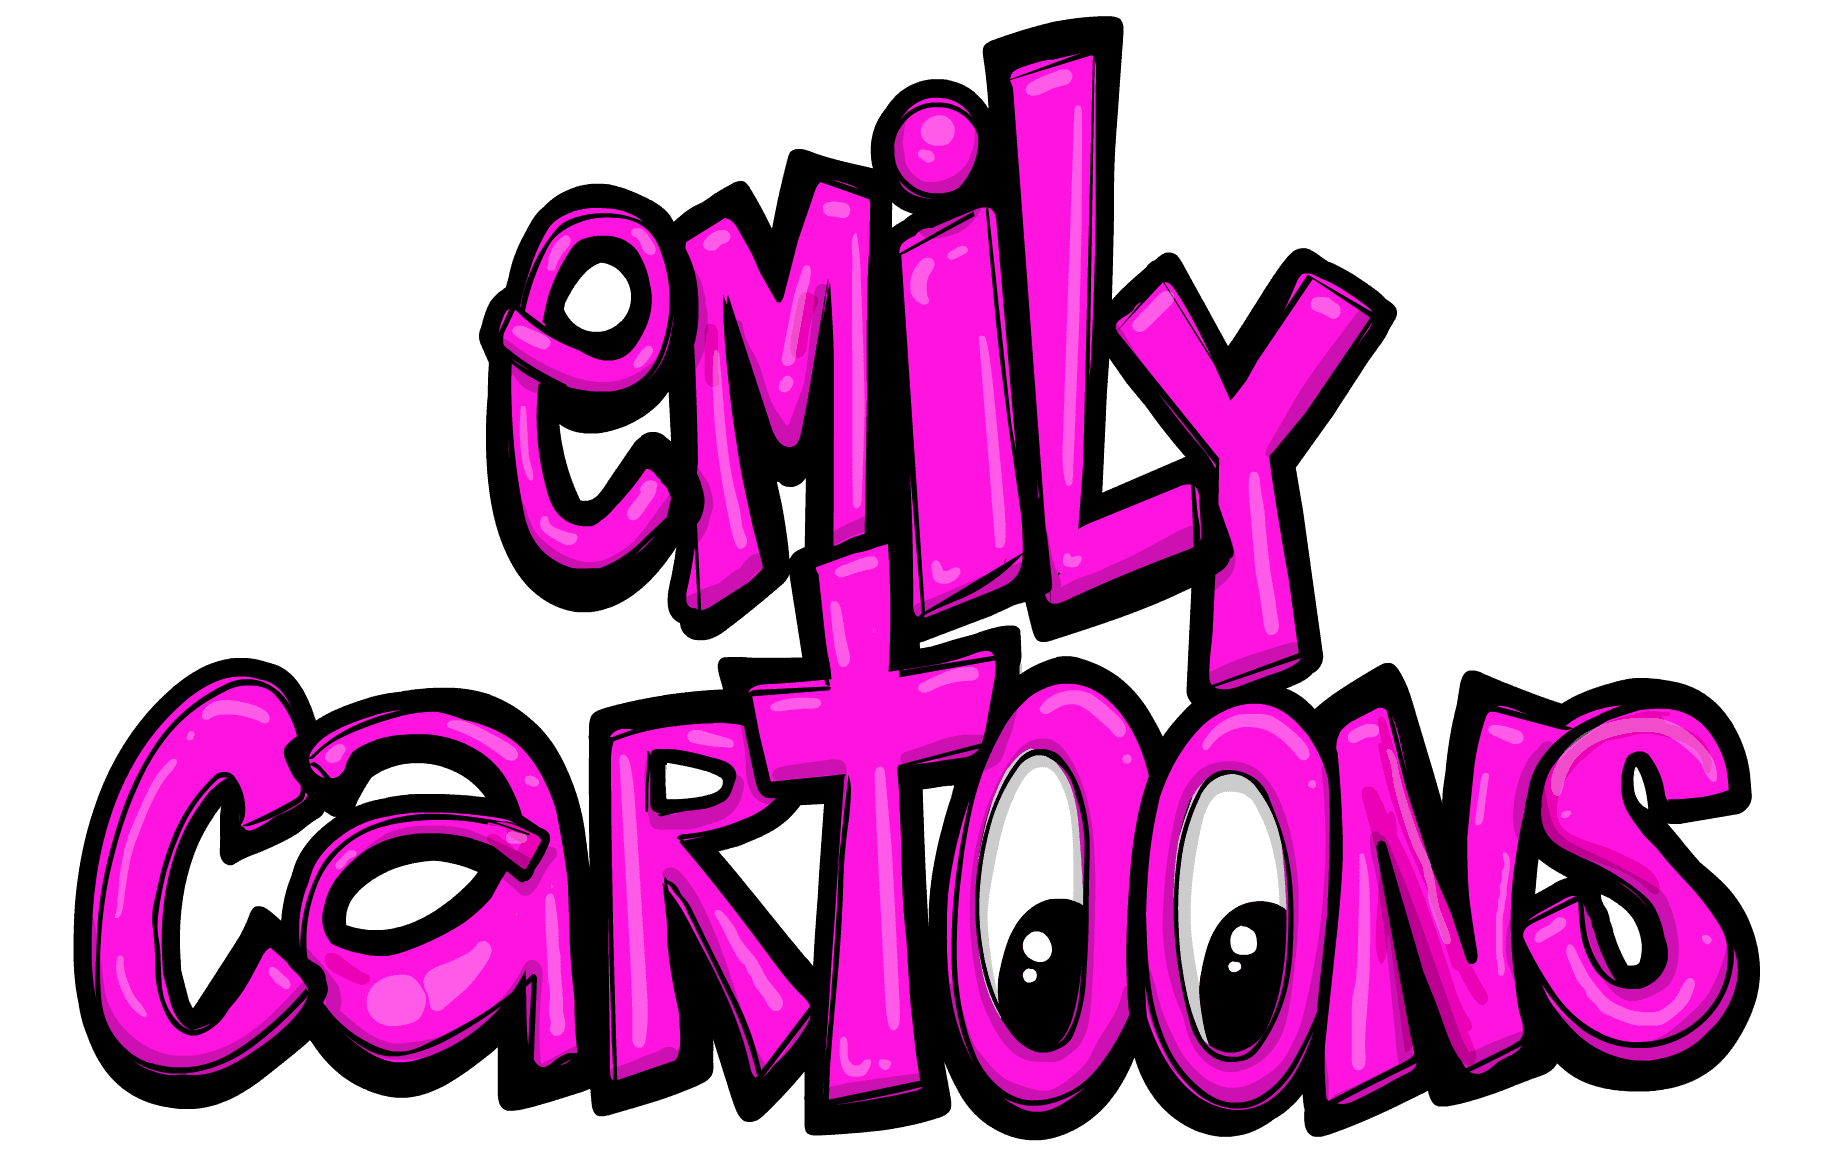 EmilyCartoonsOtherPage 橫幅